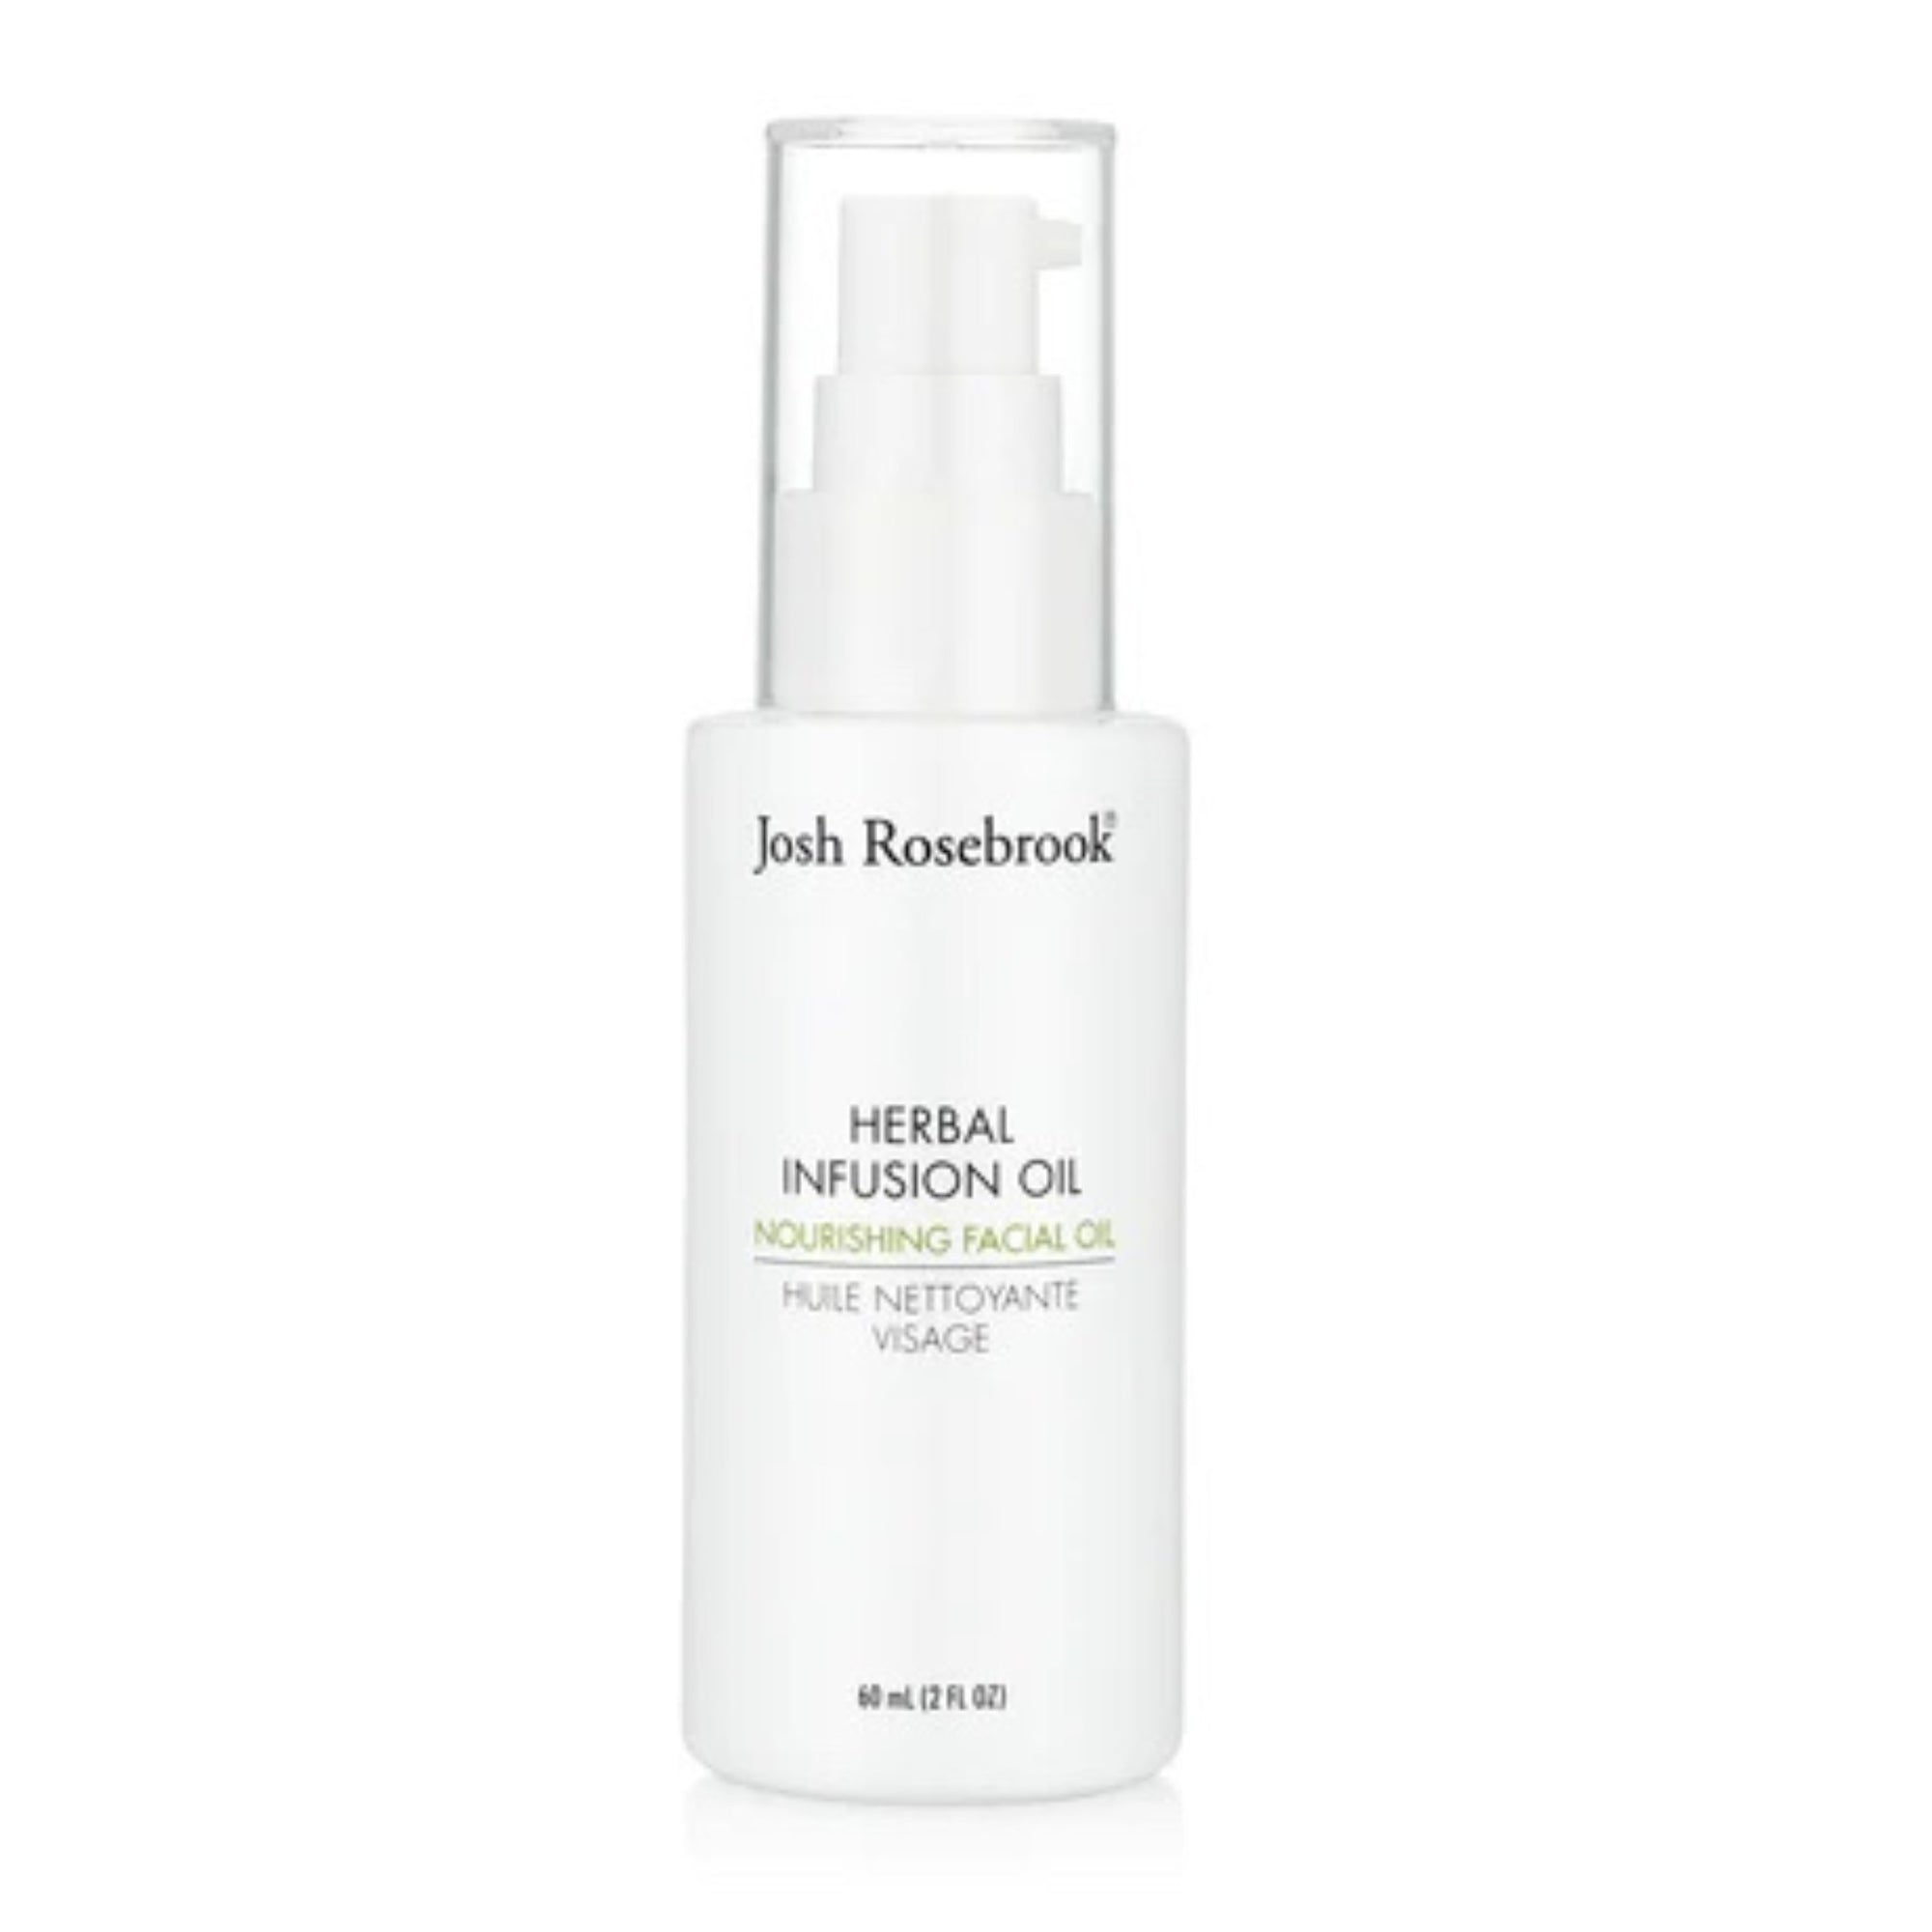 Josh Rosebrook - Josh Rosebrook Herbal Infusion Oil - ORESTA clean beauty simplified